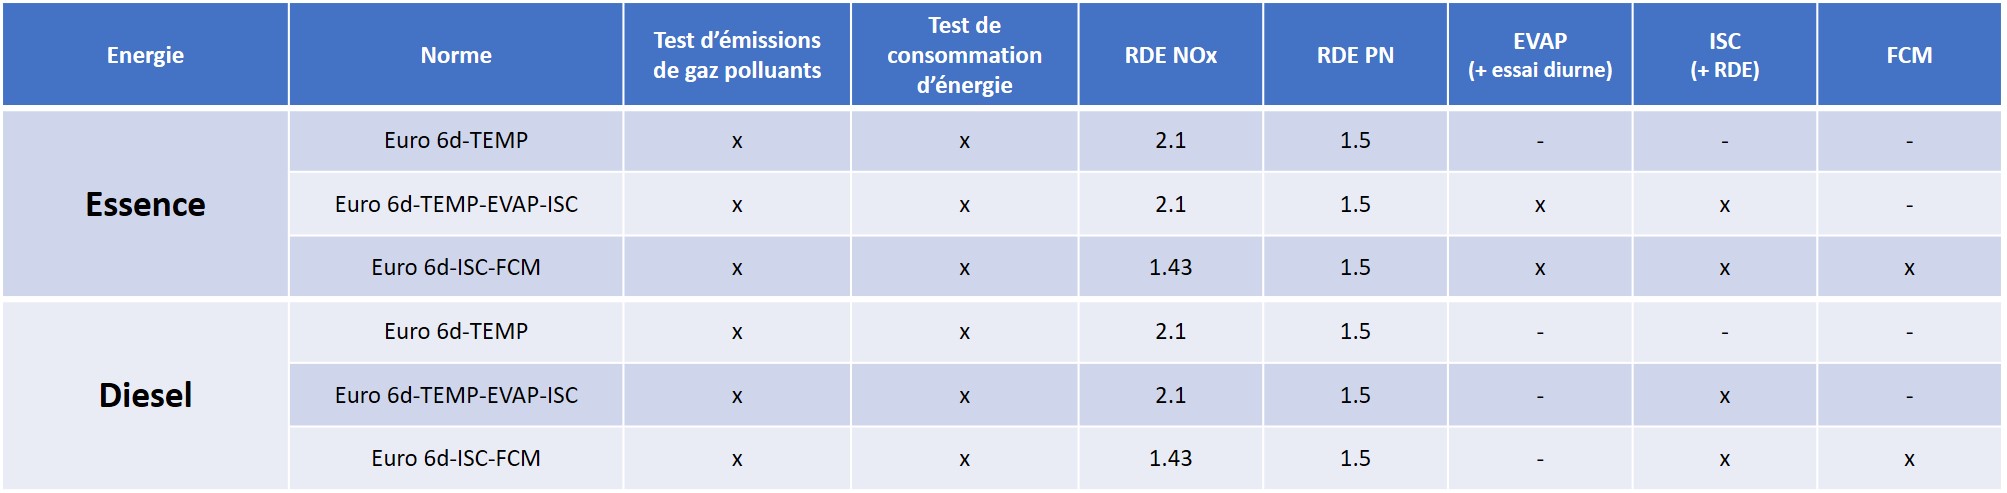 tableau récapitulatif évolution normes Euro 6d temp / Euro 6d essence diesel - www.guillaumedarding.fr